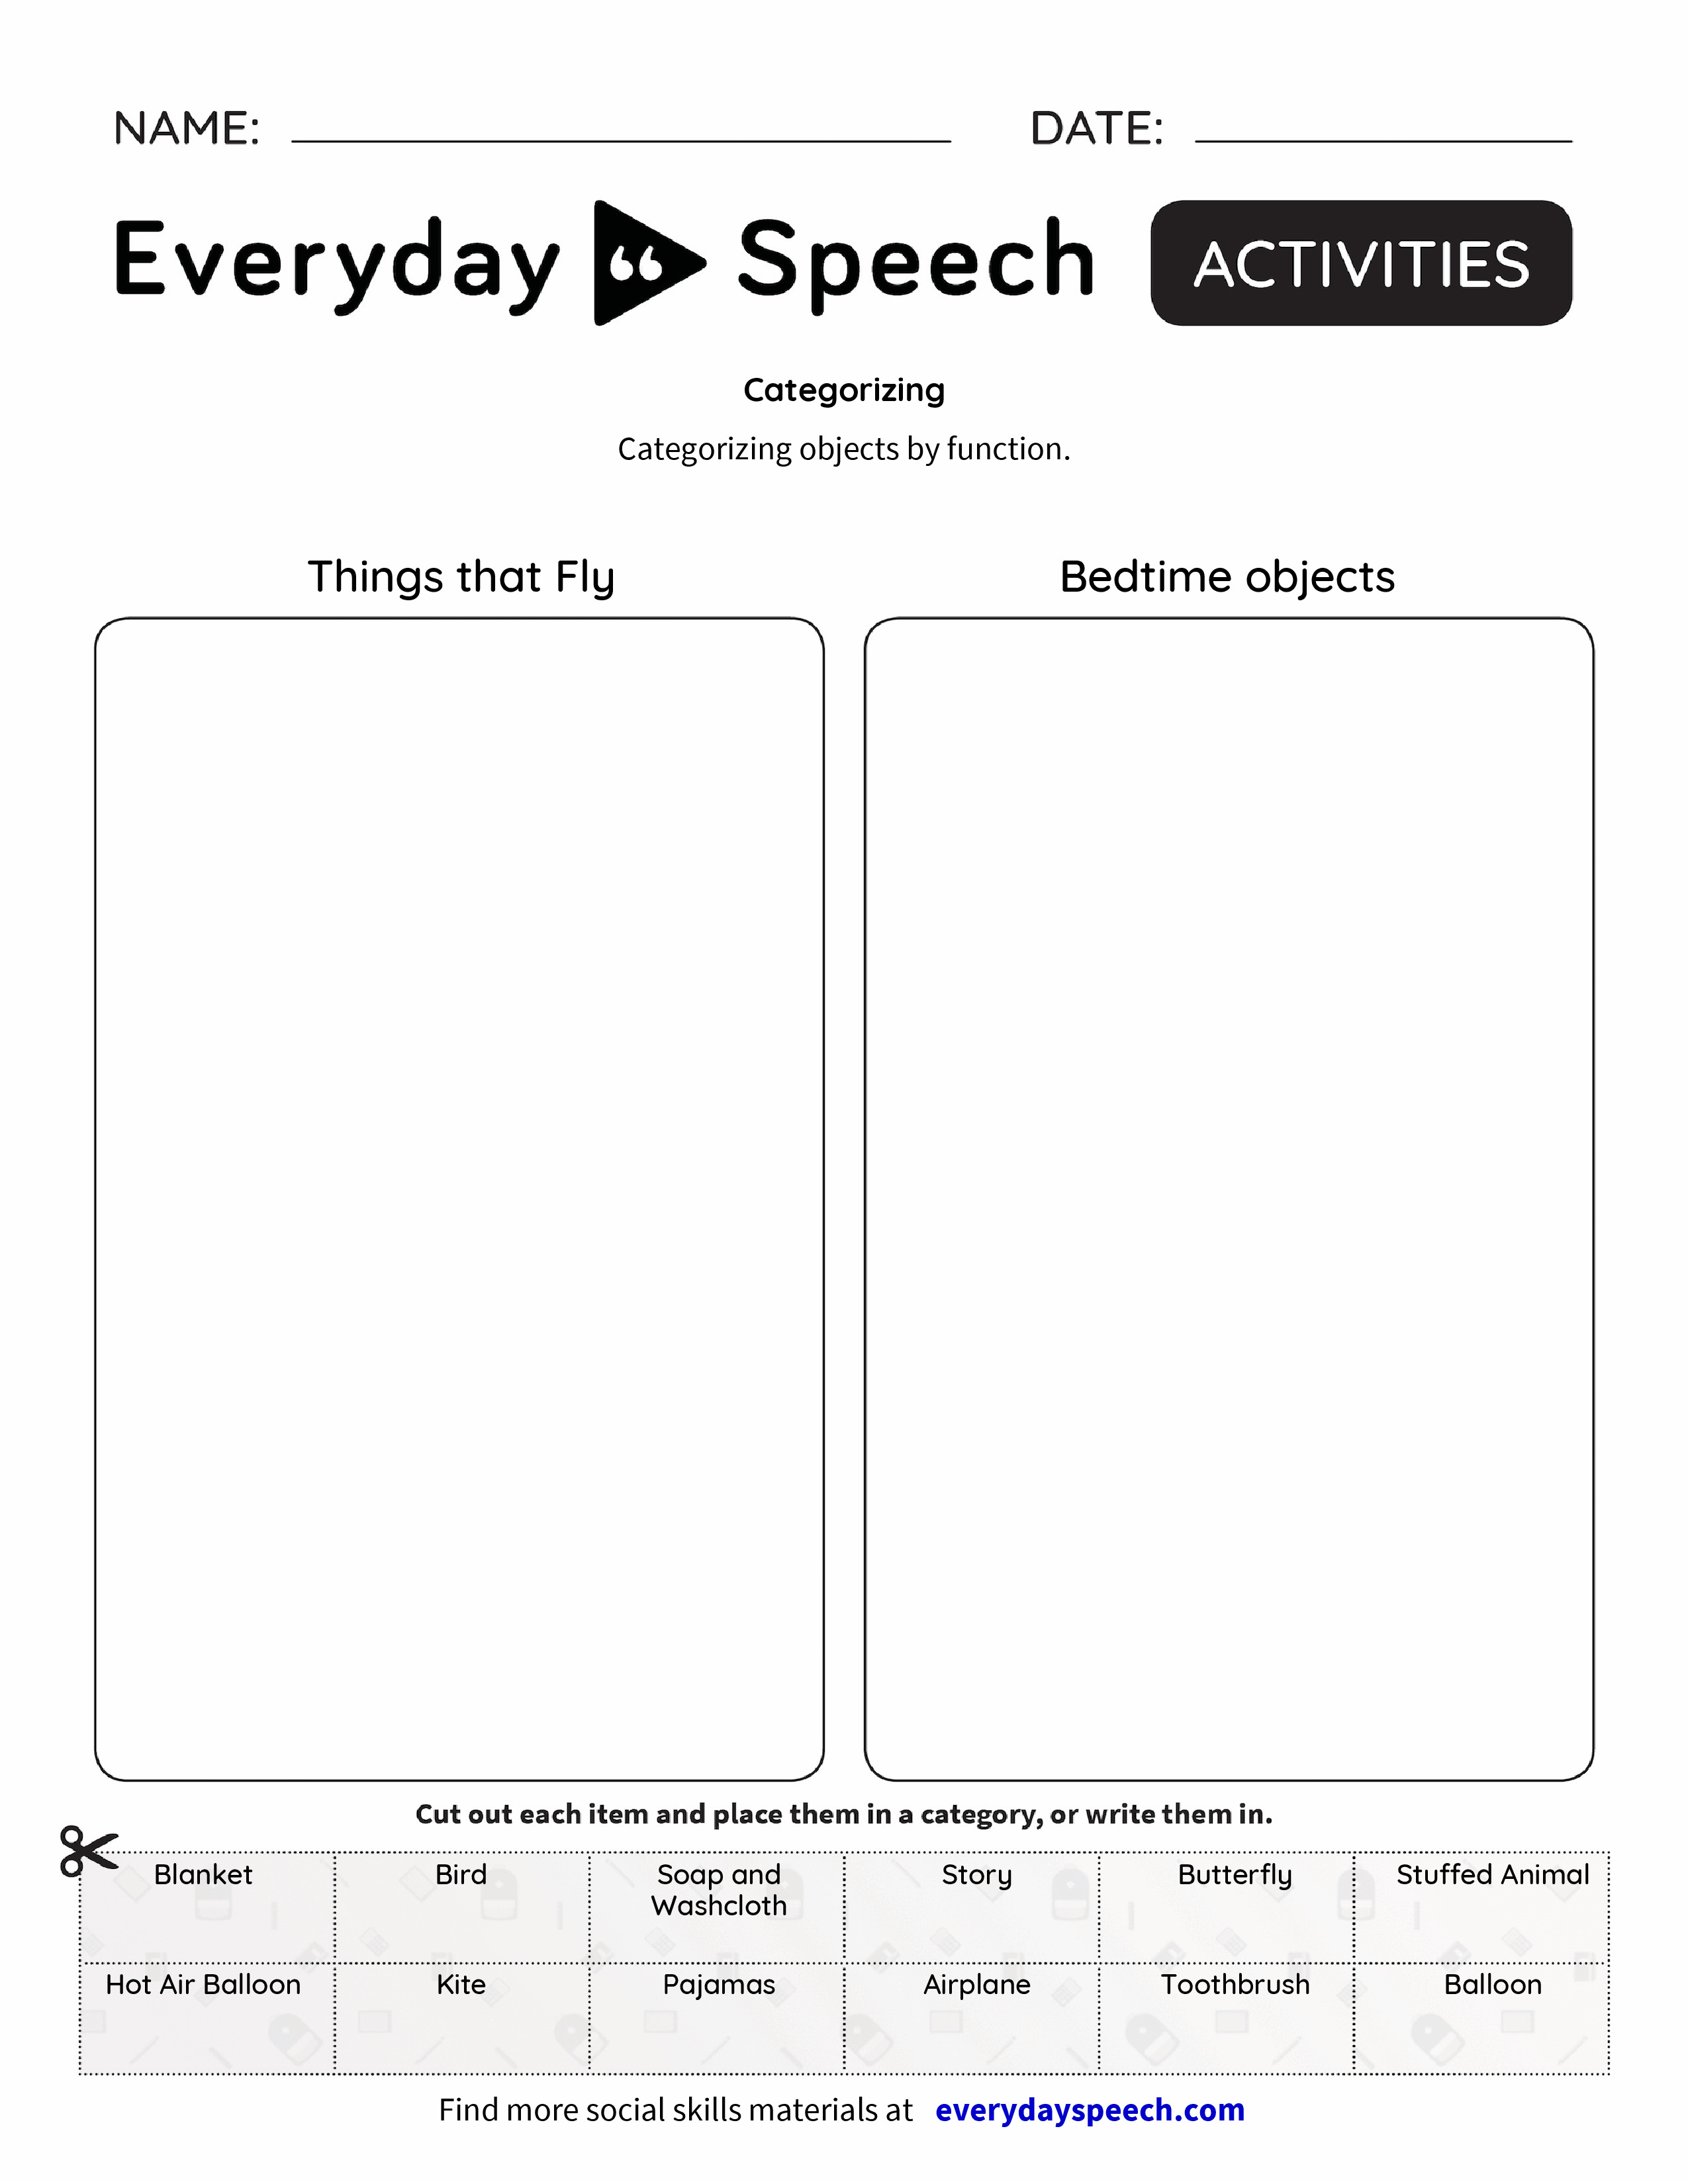 categorizing-everyday-speech-everyday-speech